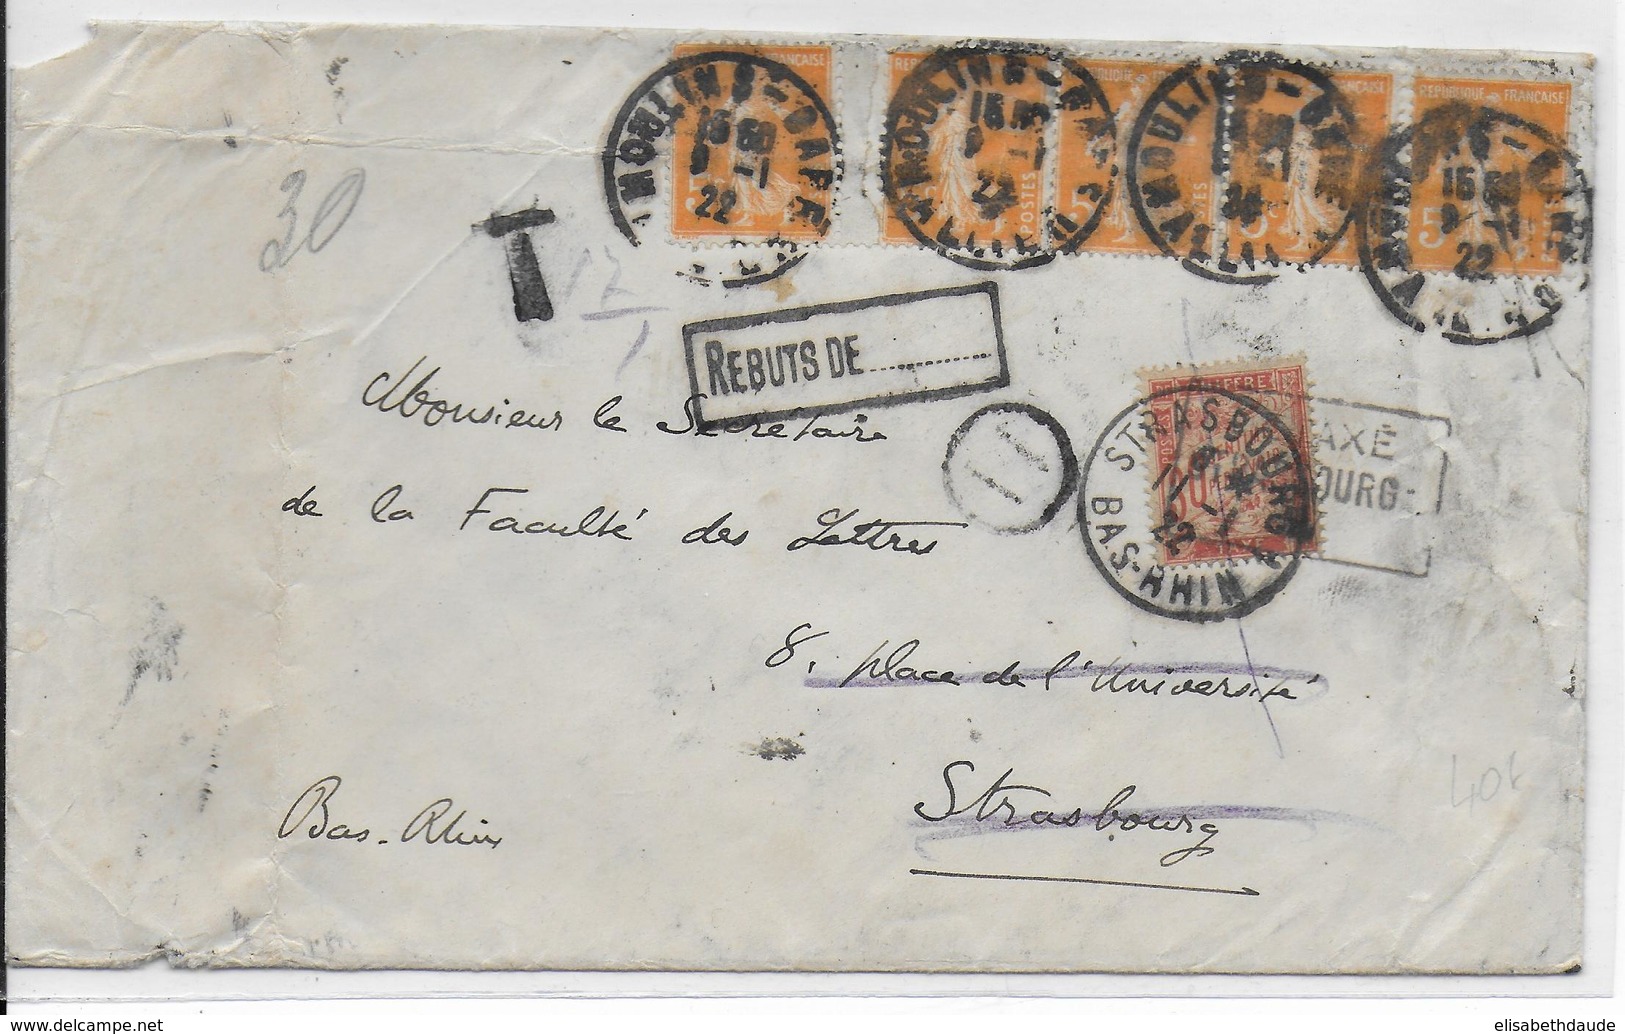 1922 - ENVELOPPE De MOULINS (SEMEUSE) => STRASBOURG TAXEE Puis DETAXEE Avec RARE CACHET DETAXE ! => REBUTS - 1859-1959 Lettres & Documents